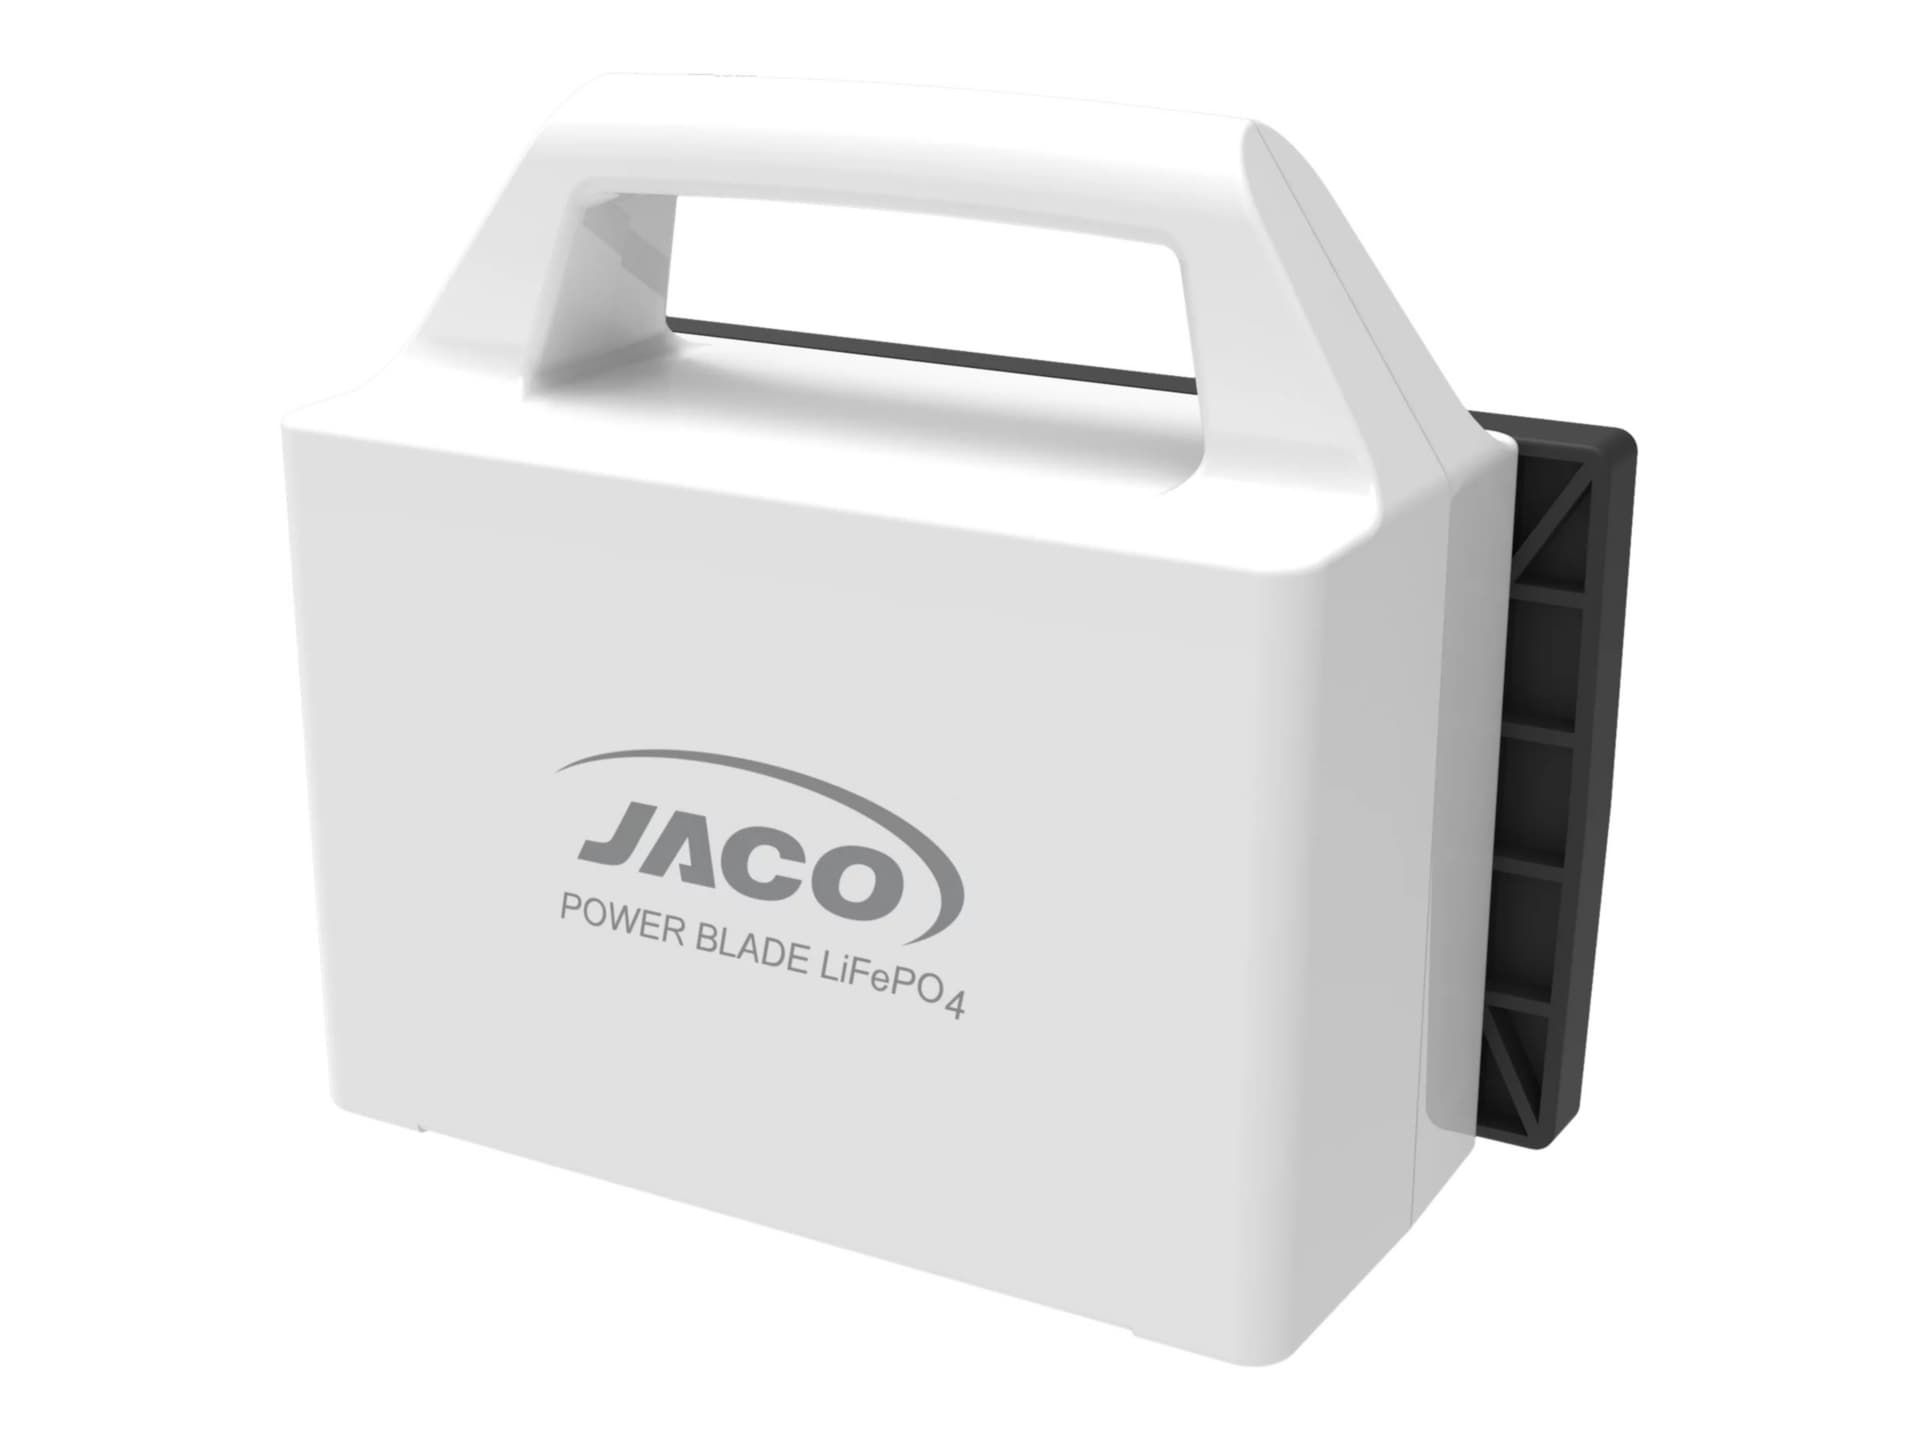 JACO POWER BLADE LiFePO4 - medical cart battery - LiFePO4 - 18 Ah - 230.4 Wh